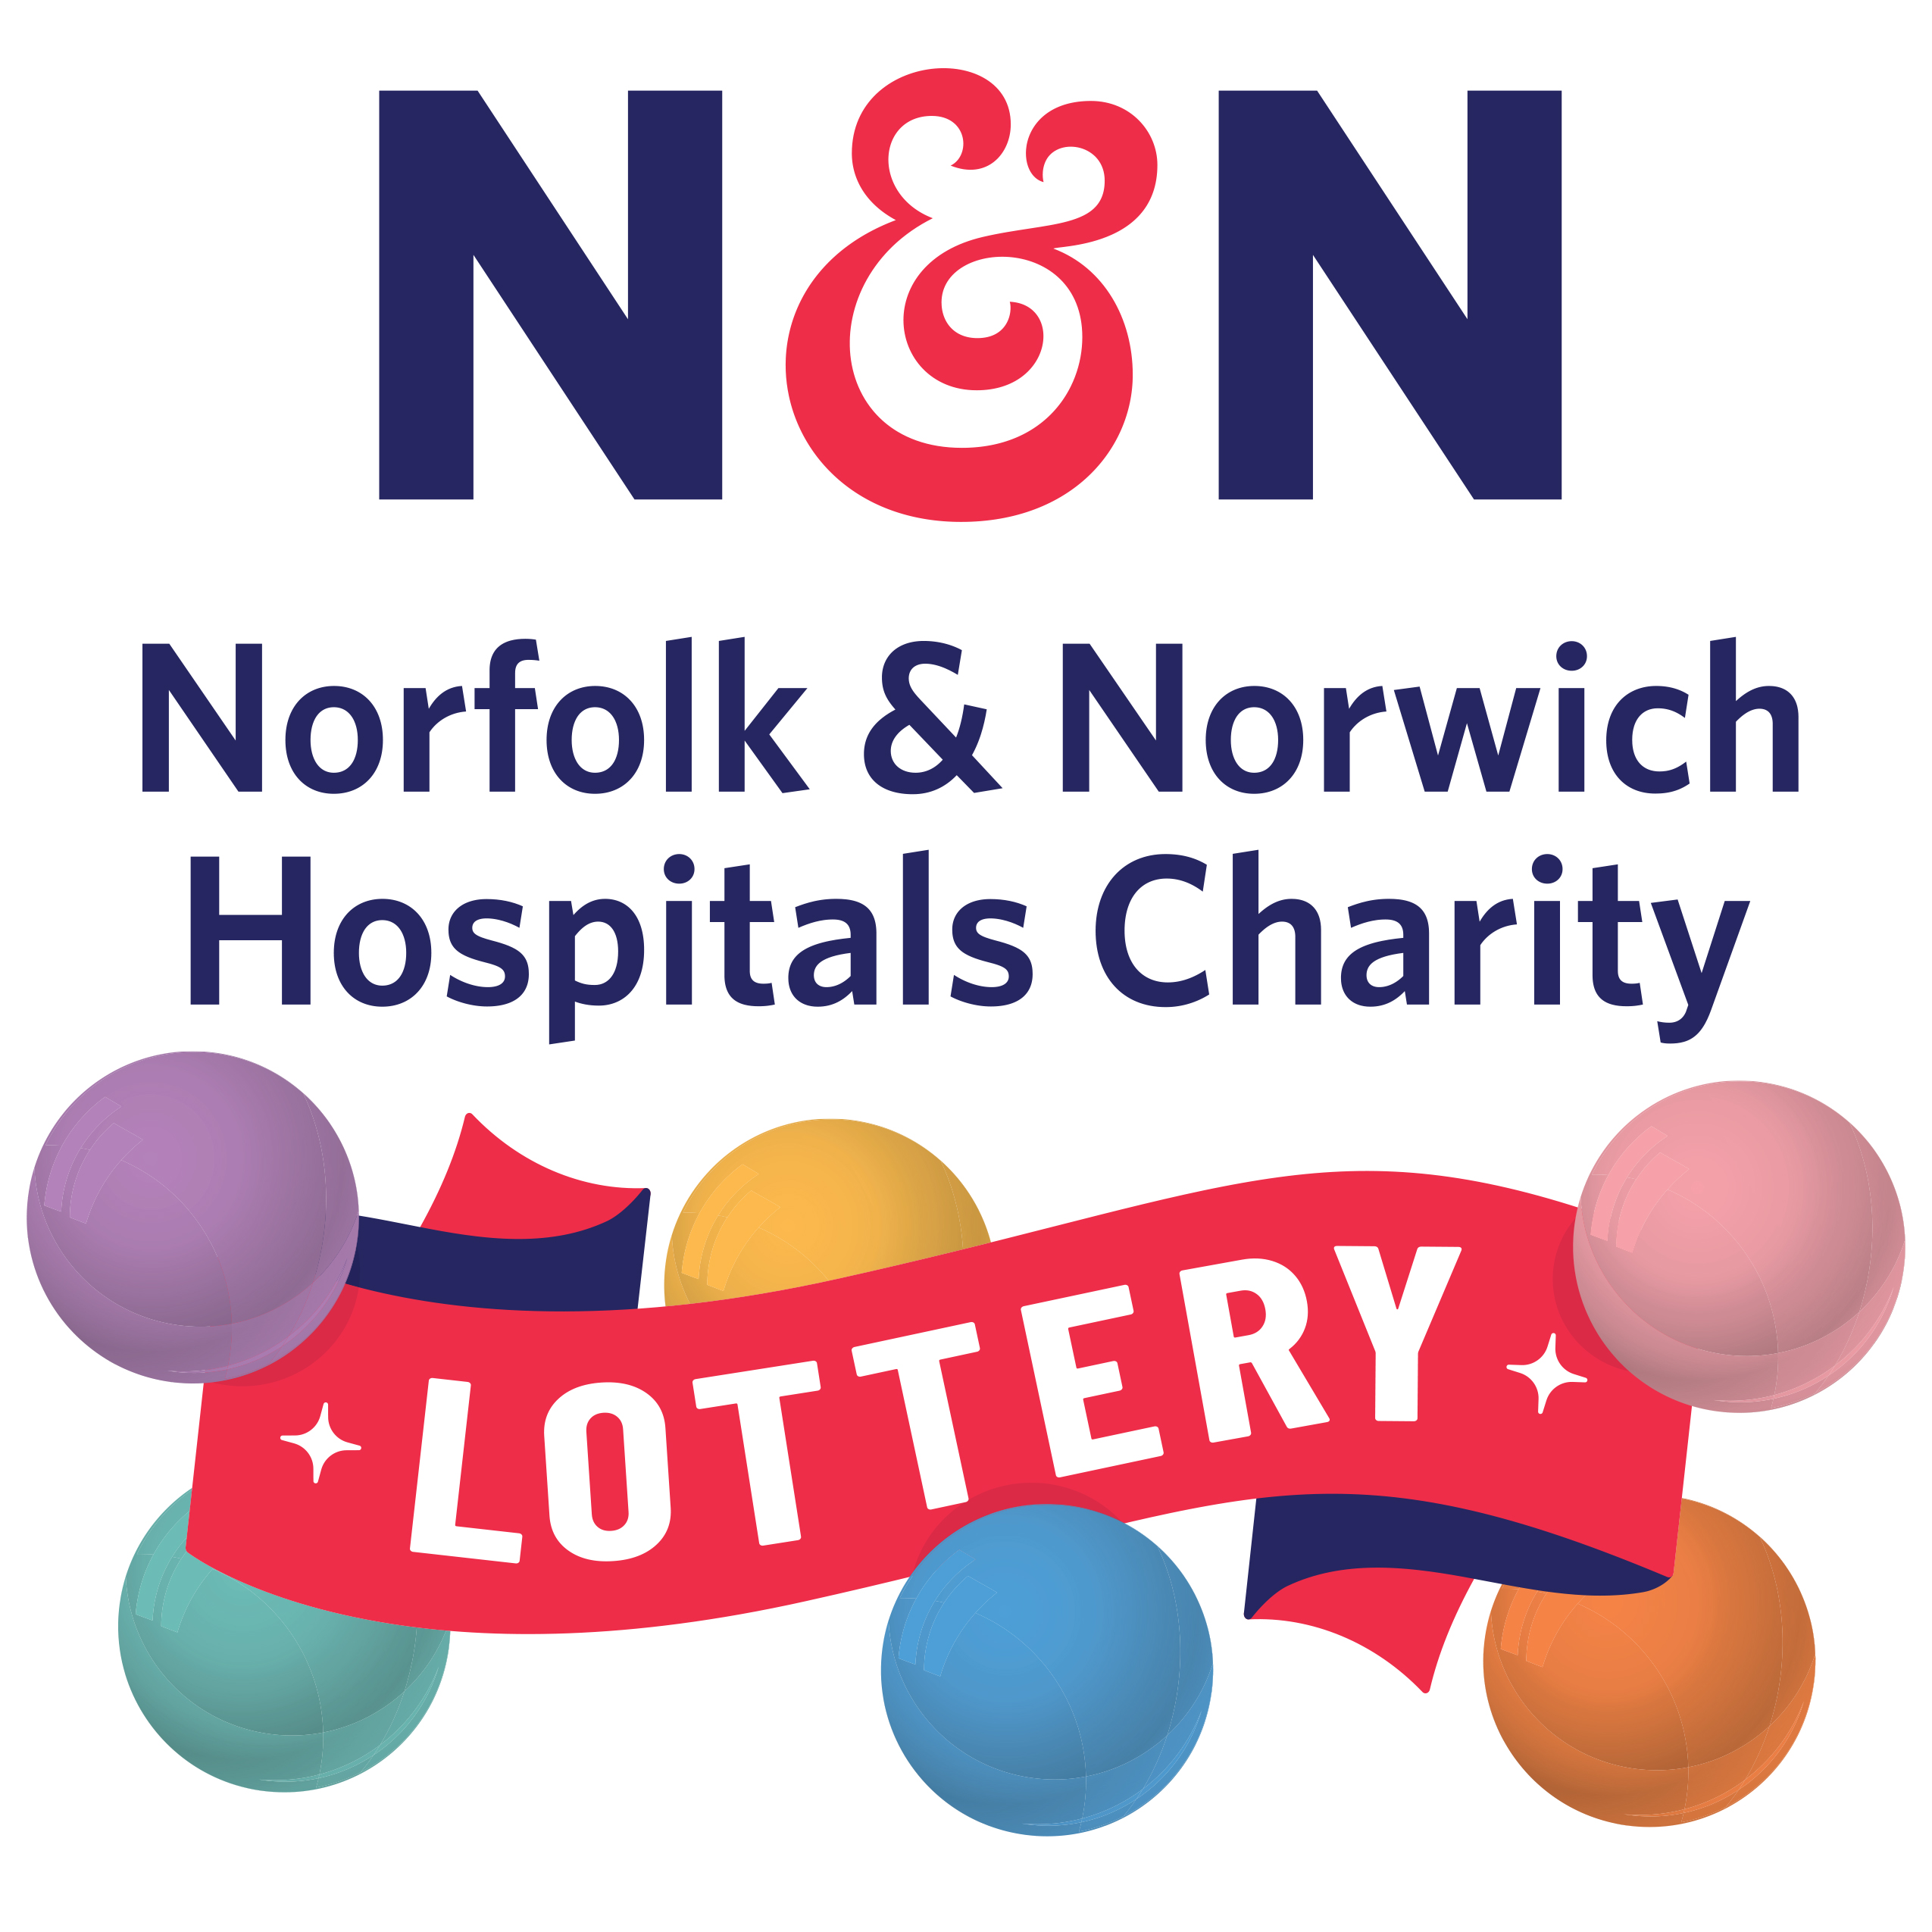 Hospital Charity Lottery starts with £25,000 jackpot